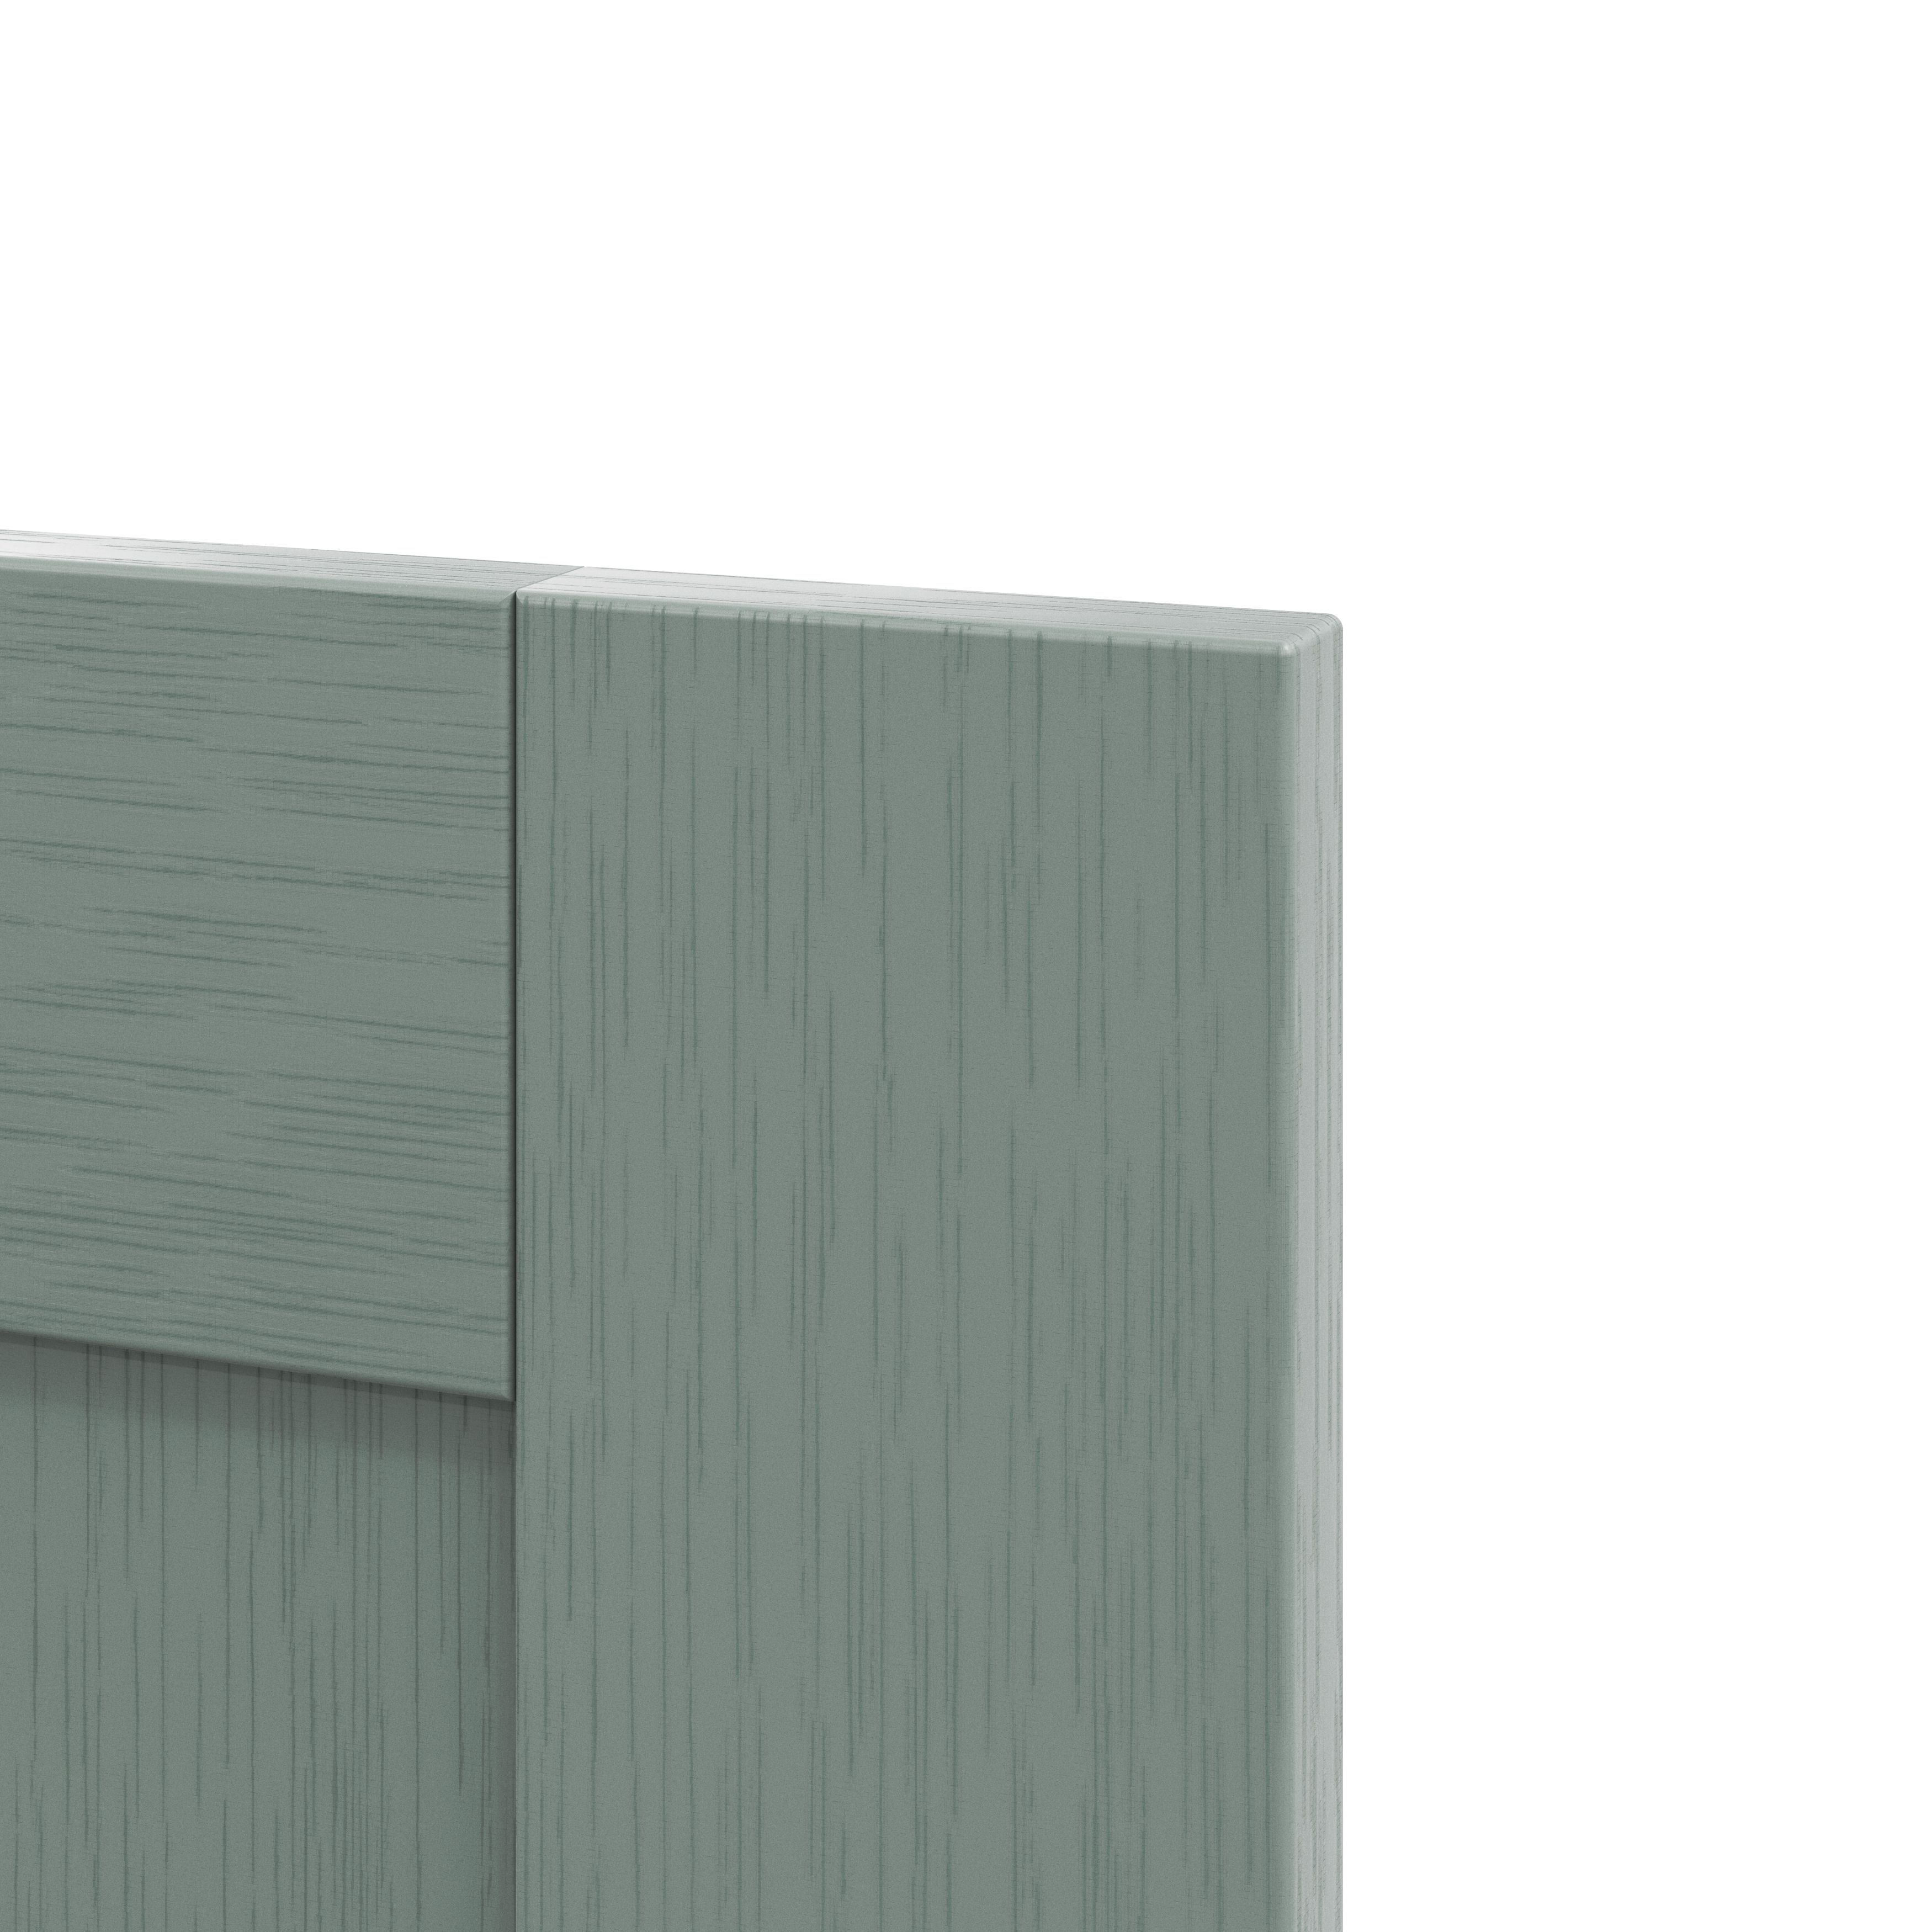 GoodHome Alpinia Matt Green Painted Wood Effect Shaker Tall wall Cabinet door (W)600mm (H)895mm (T)18mm